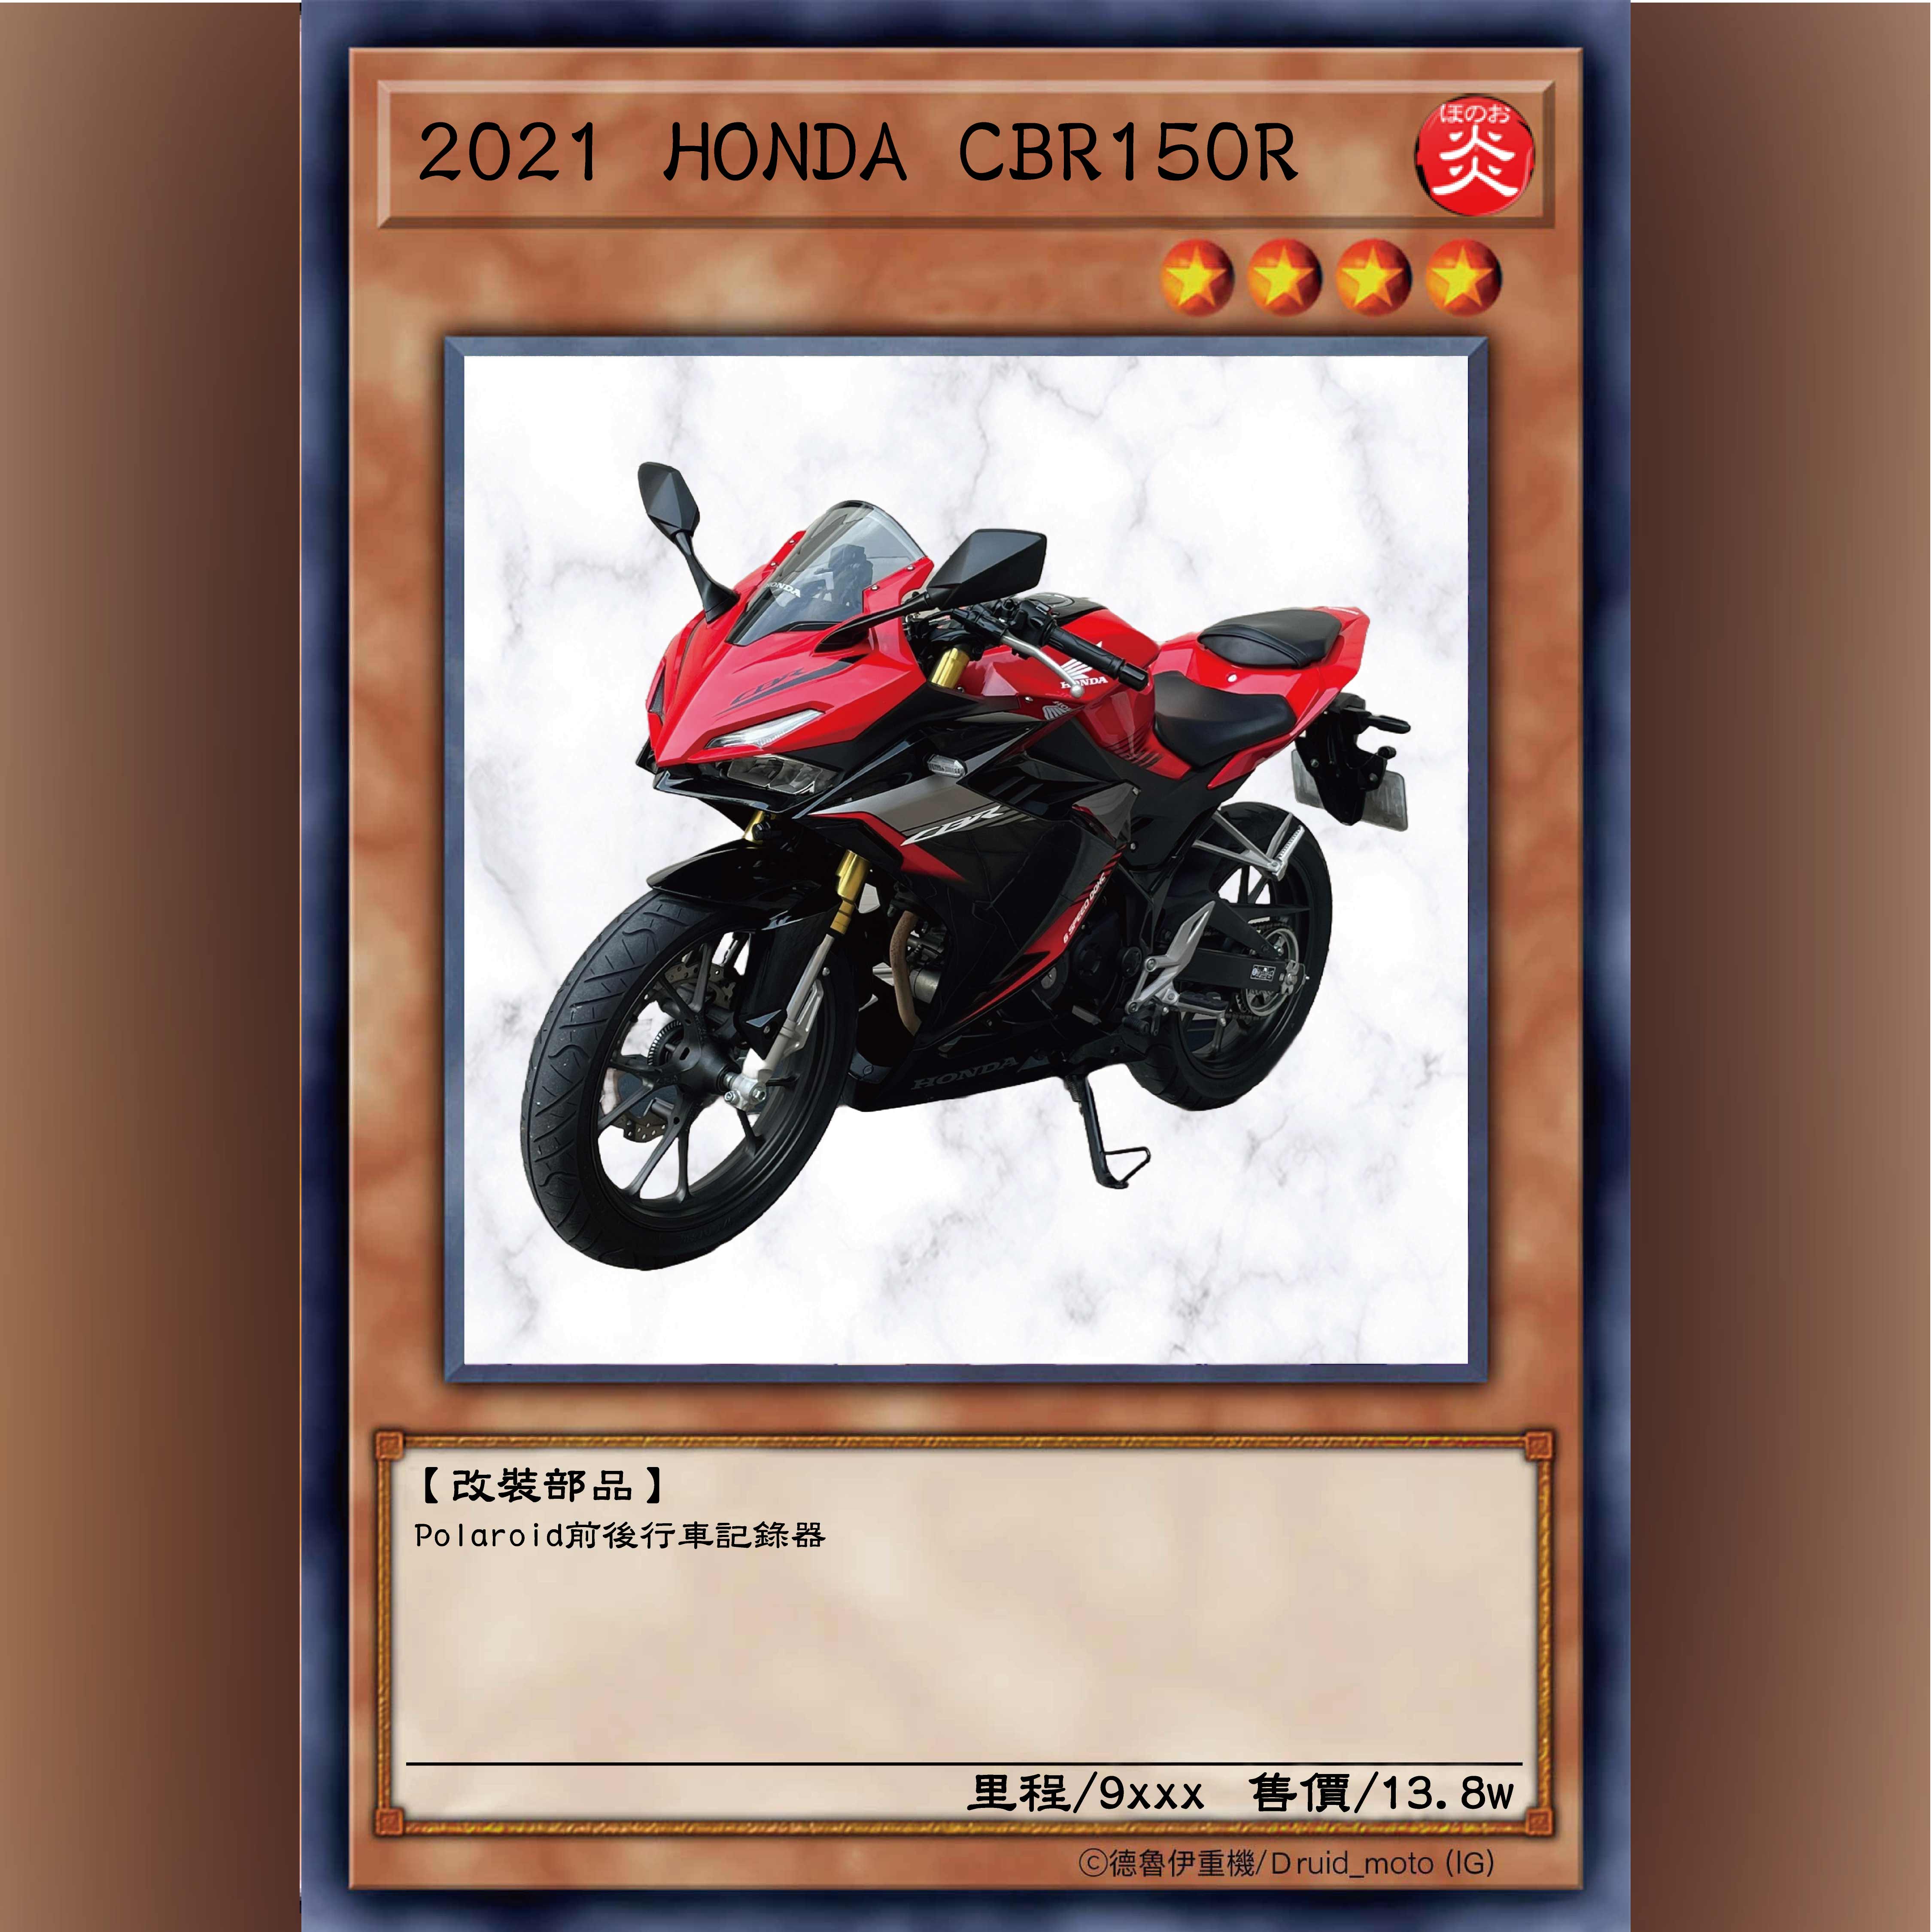 【德魯伊重機】HONDA CBR150R - 「Webike-摩托車市」 HONDA CBR150R ABS